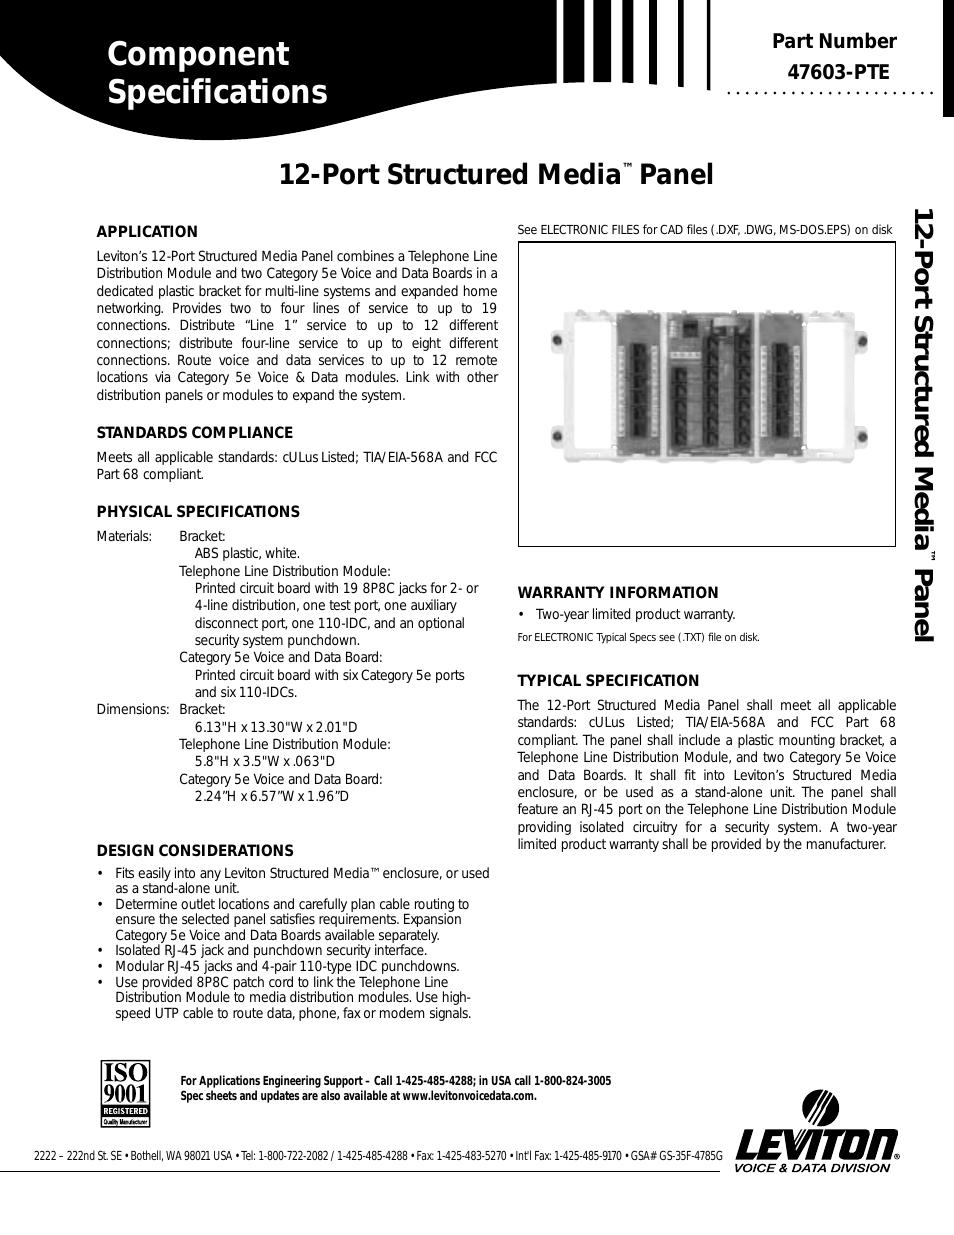 12-Port Structured Media Panel 47603-PTE